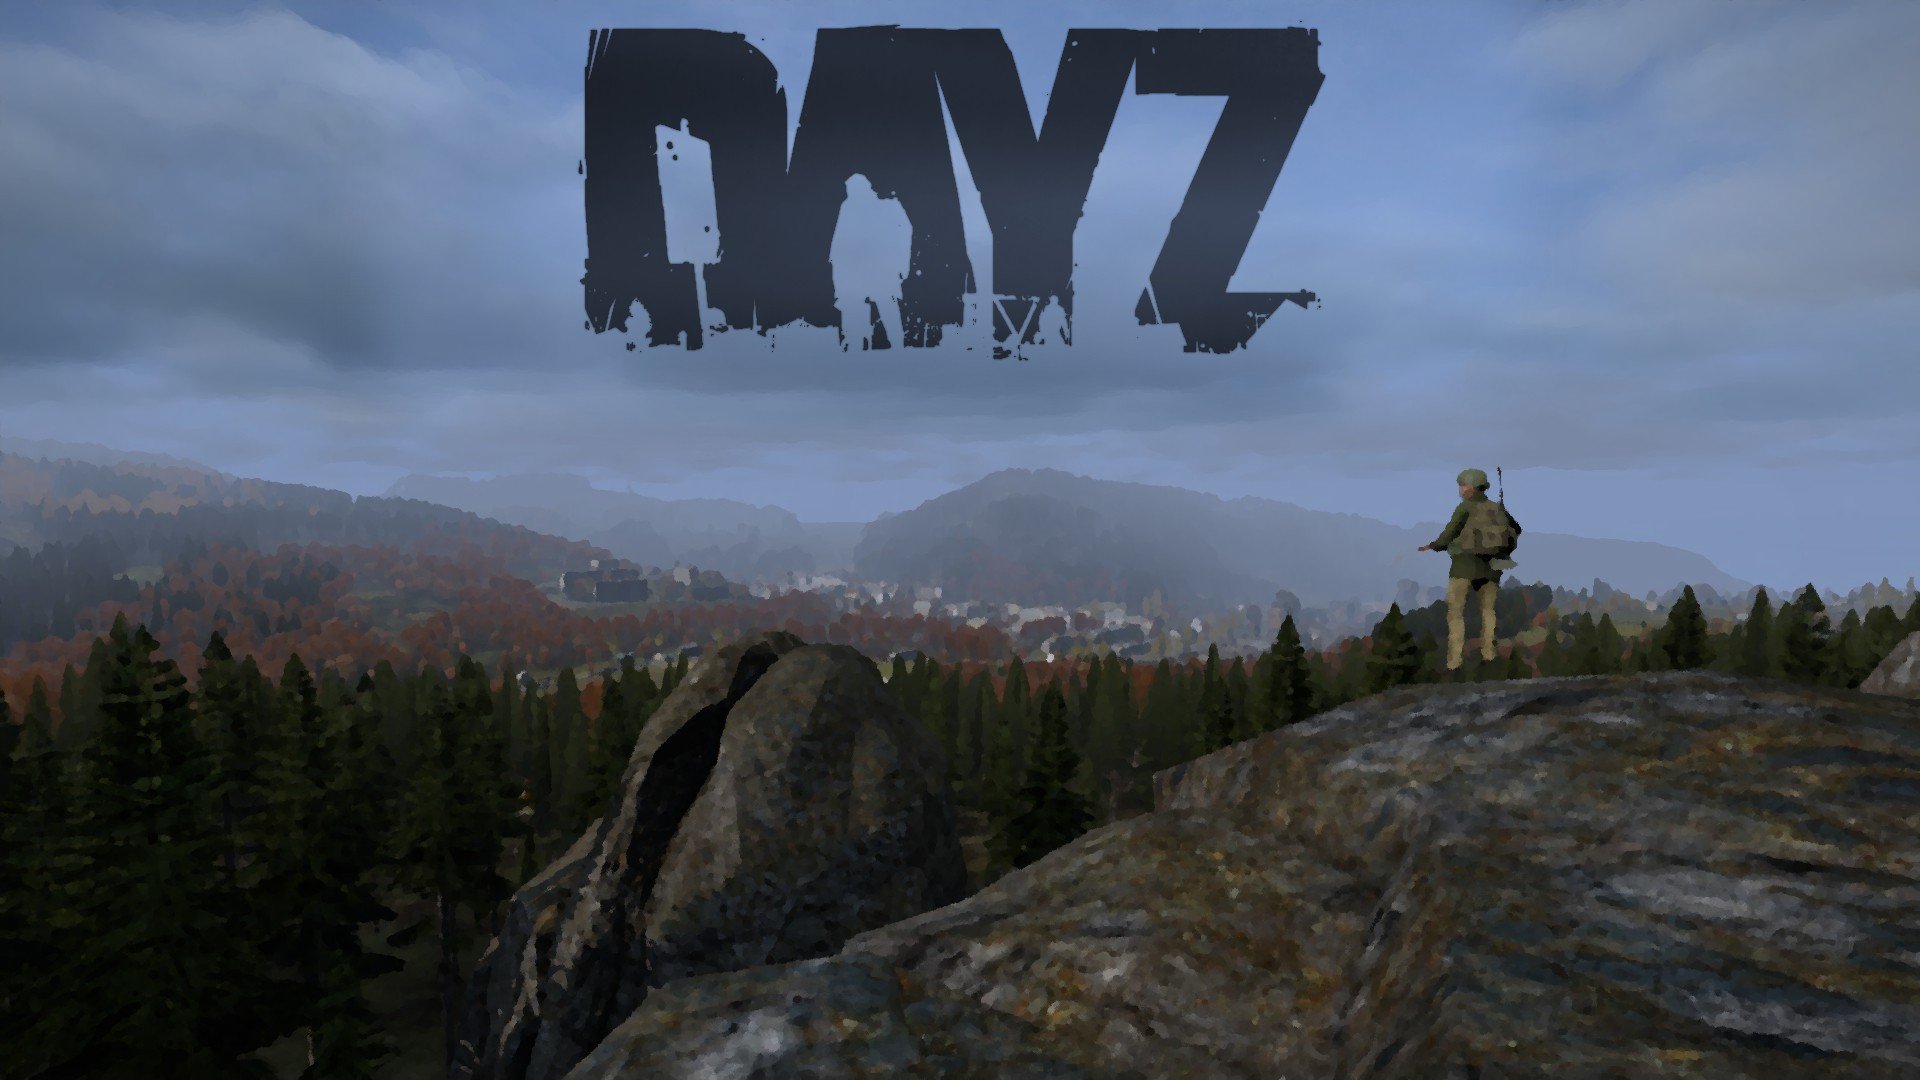 dayz standalone for mac free download